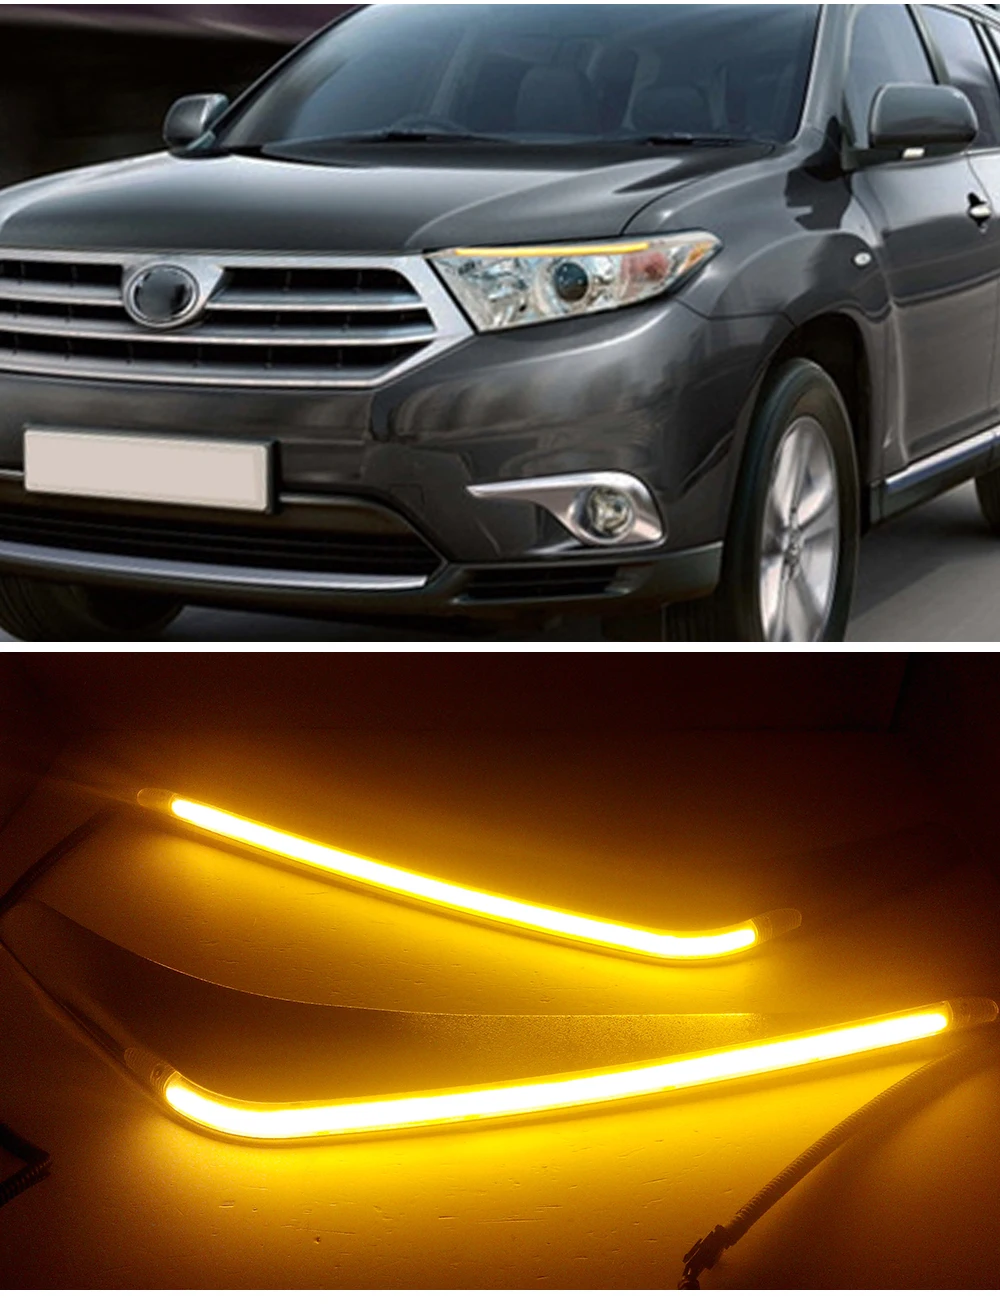 2Pcs For Toyota Highlander 2012 2013 LED Daytime Running Light Yellow Turn Signal Relay Car Headlight Eyebrow Decoration